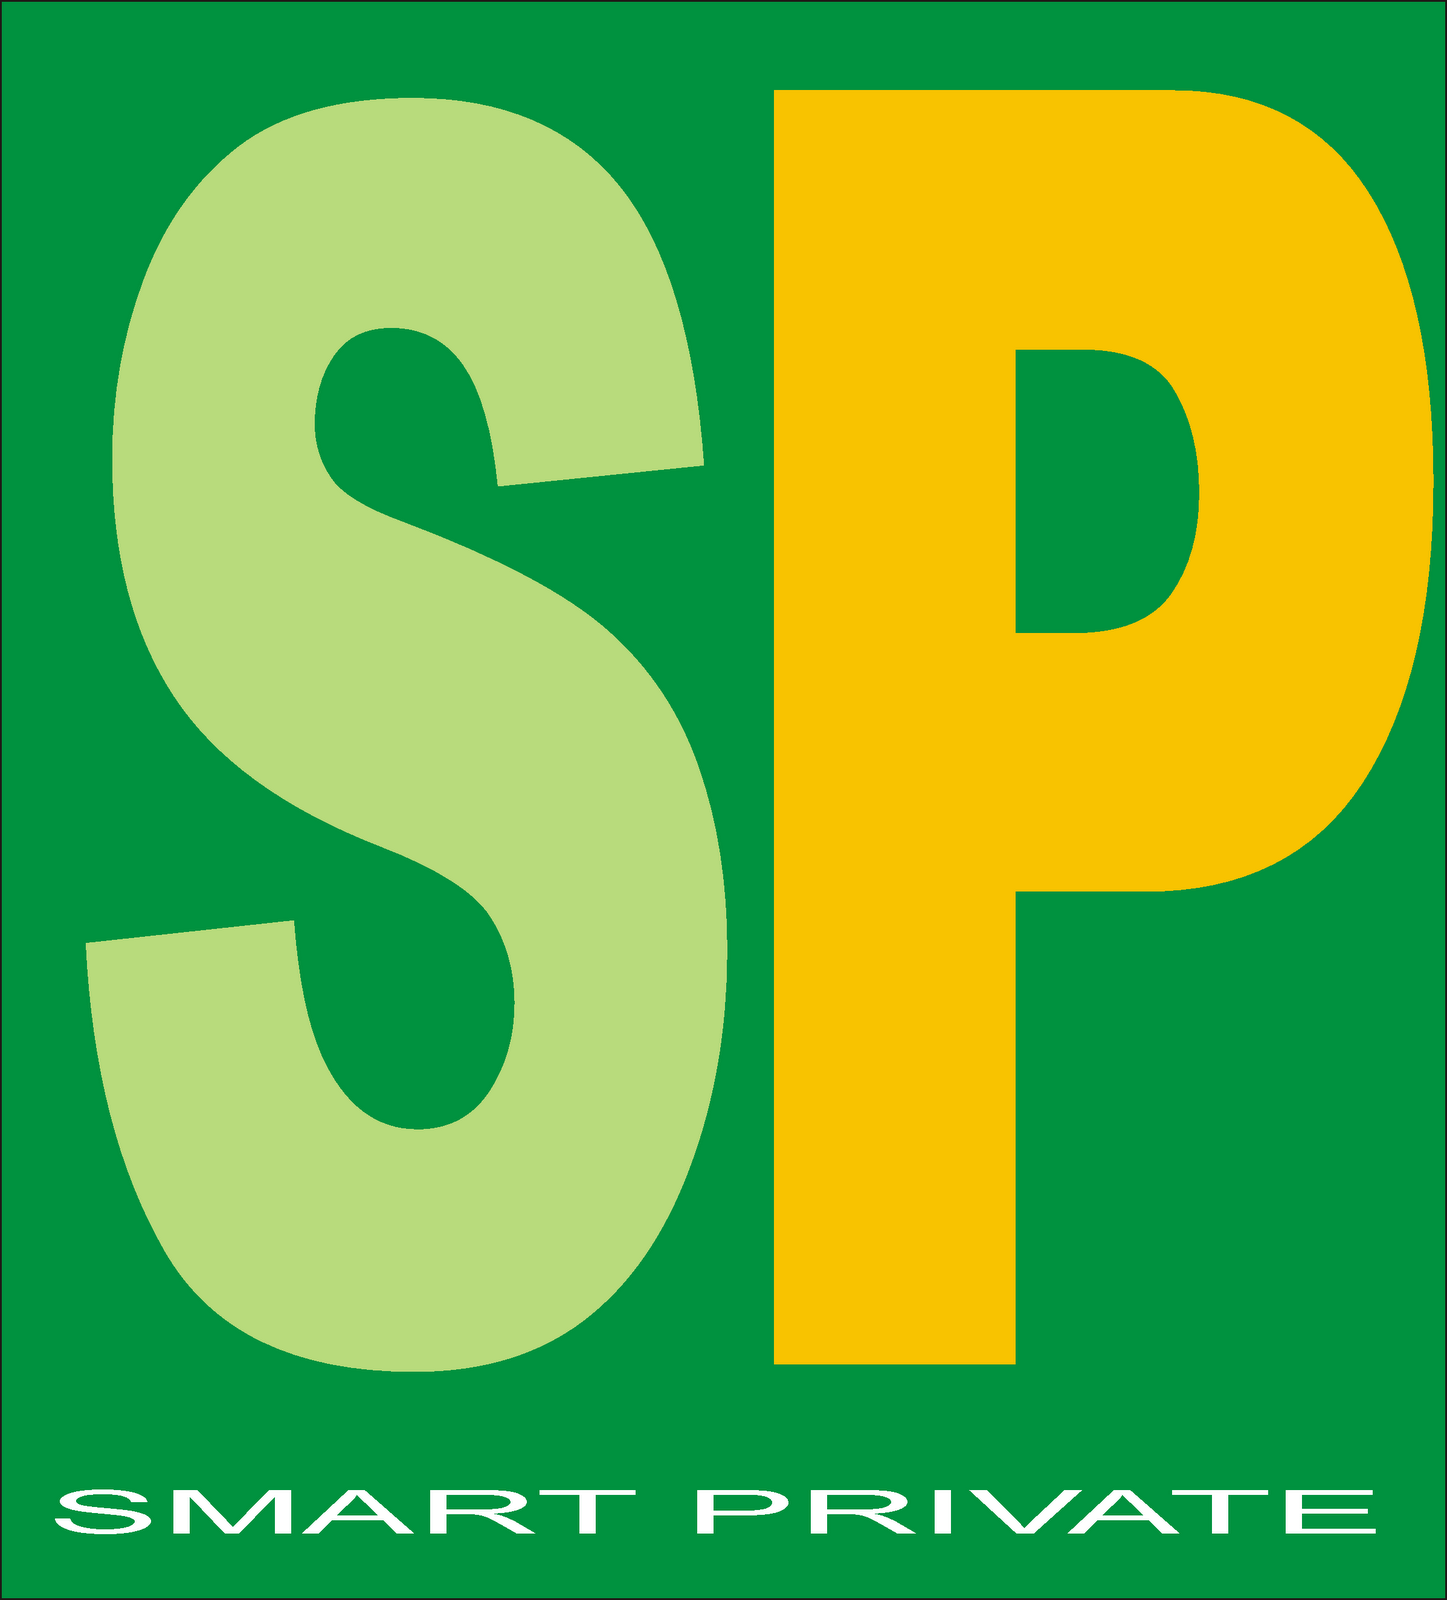 les privat murah logo